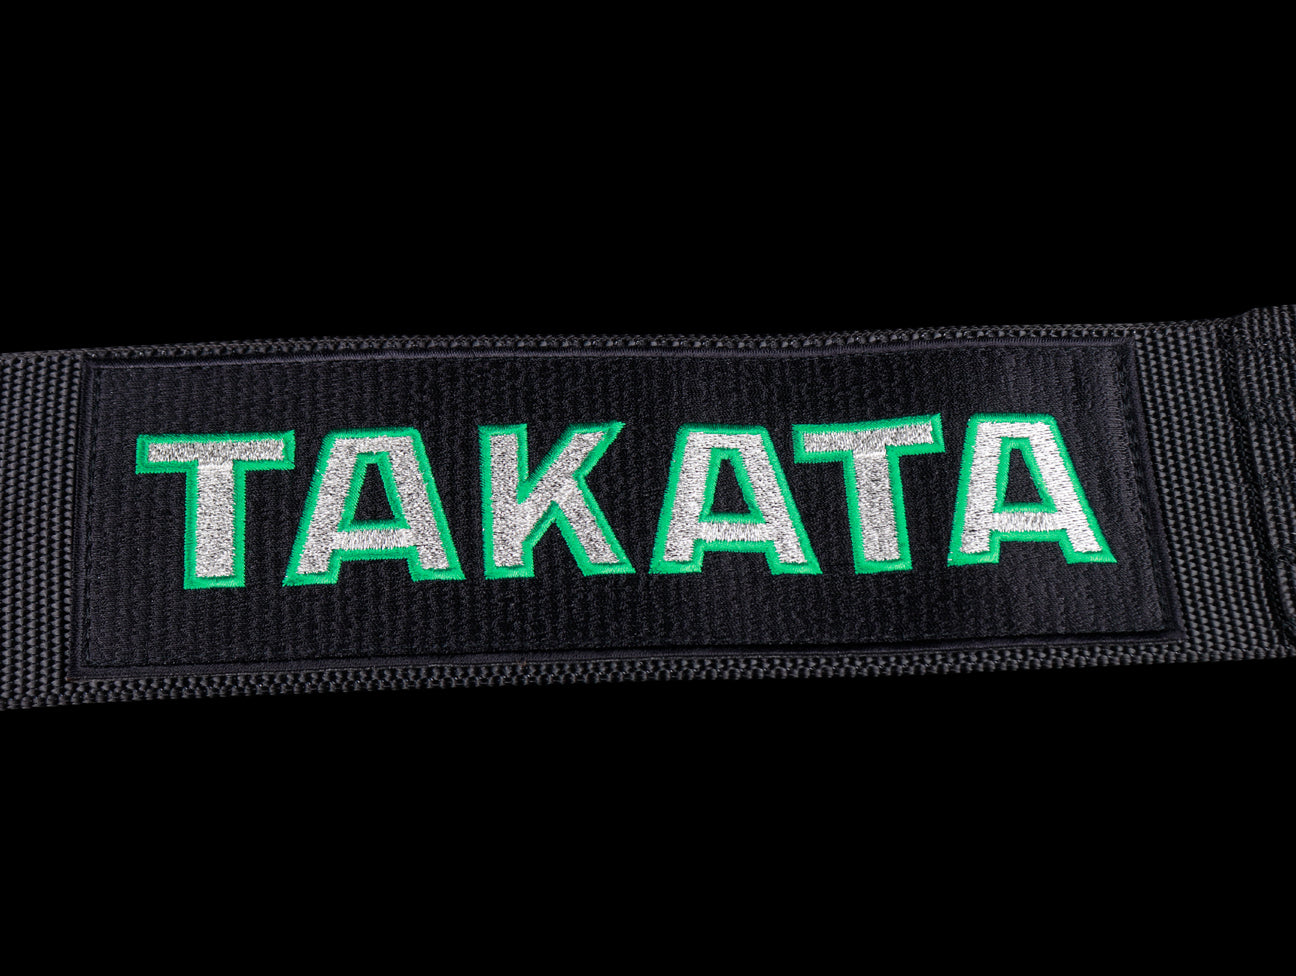 Takata 6 Point 3x2 Race Harness - Black